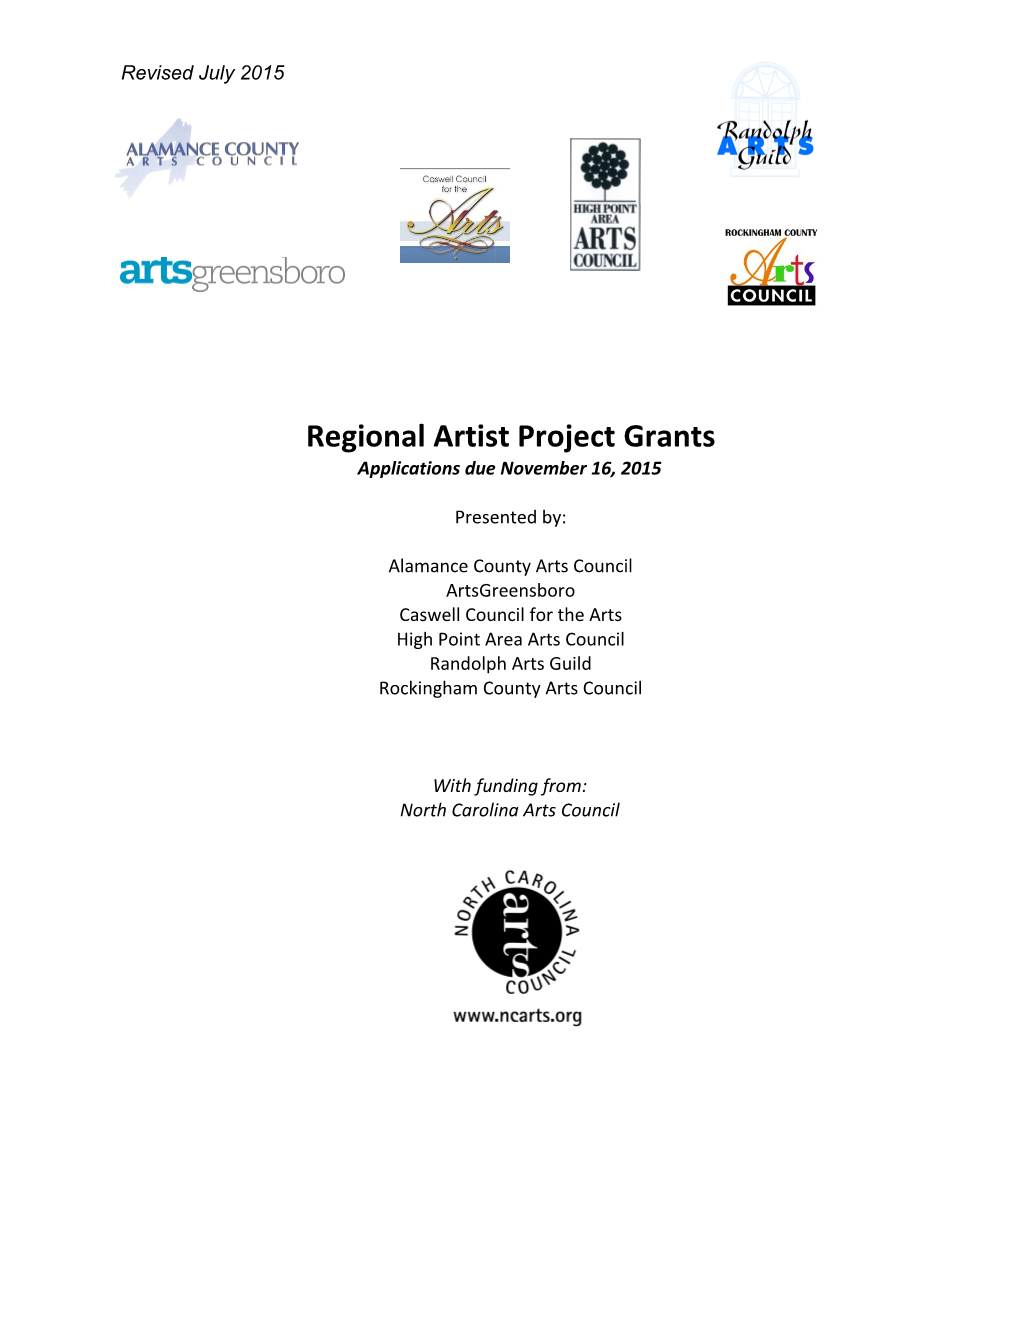 Regional Artist Project Grants Application Packet (Rev. 7/2015)